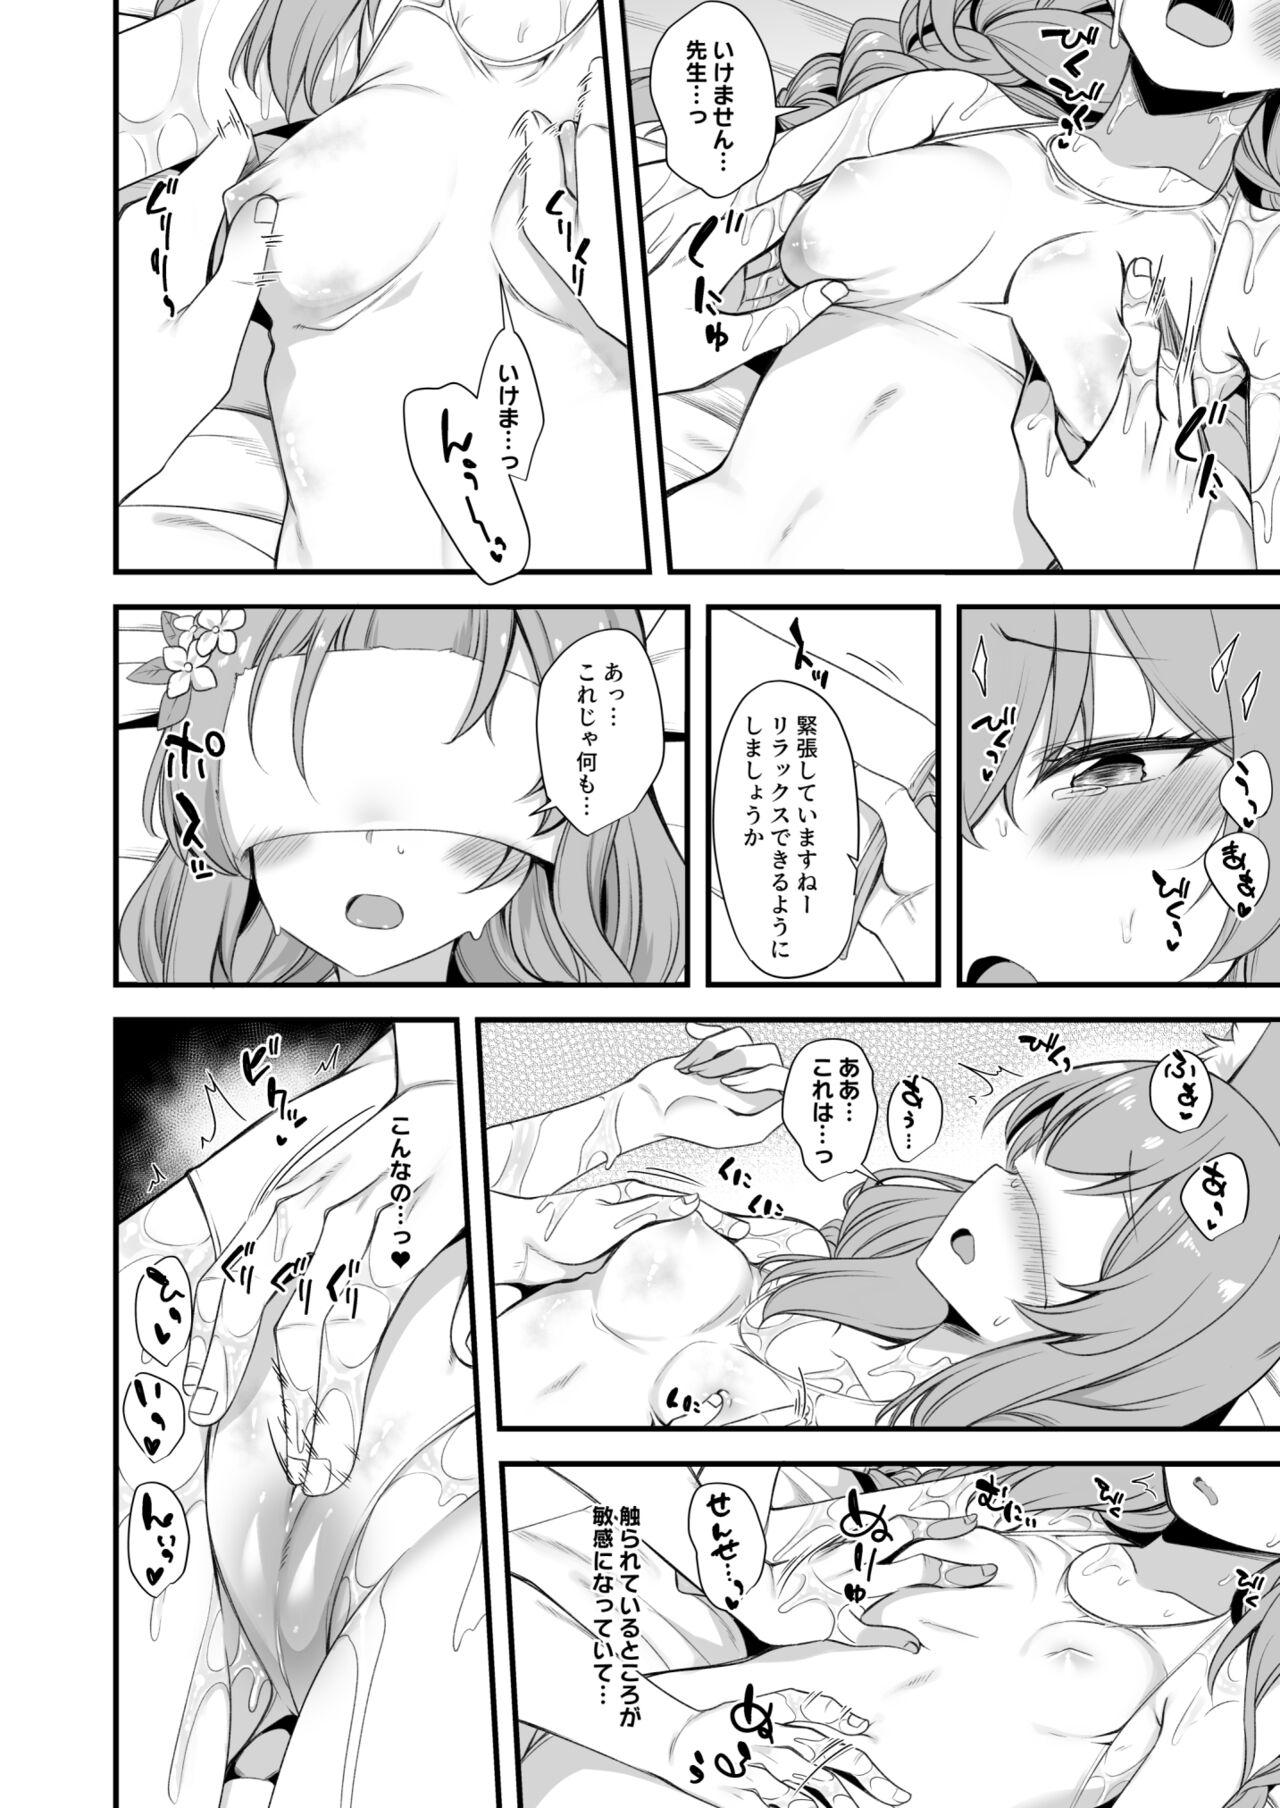 Mofos Mari Oil Massage Ecchi Manga - Blue archive Casado - Page 4